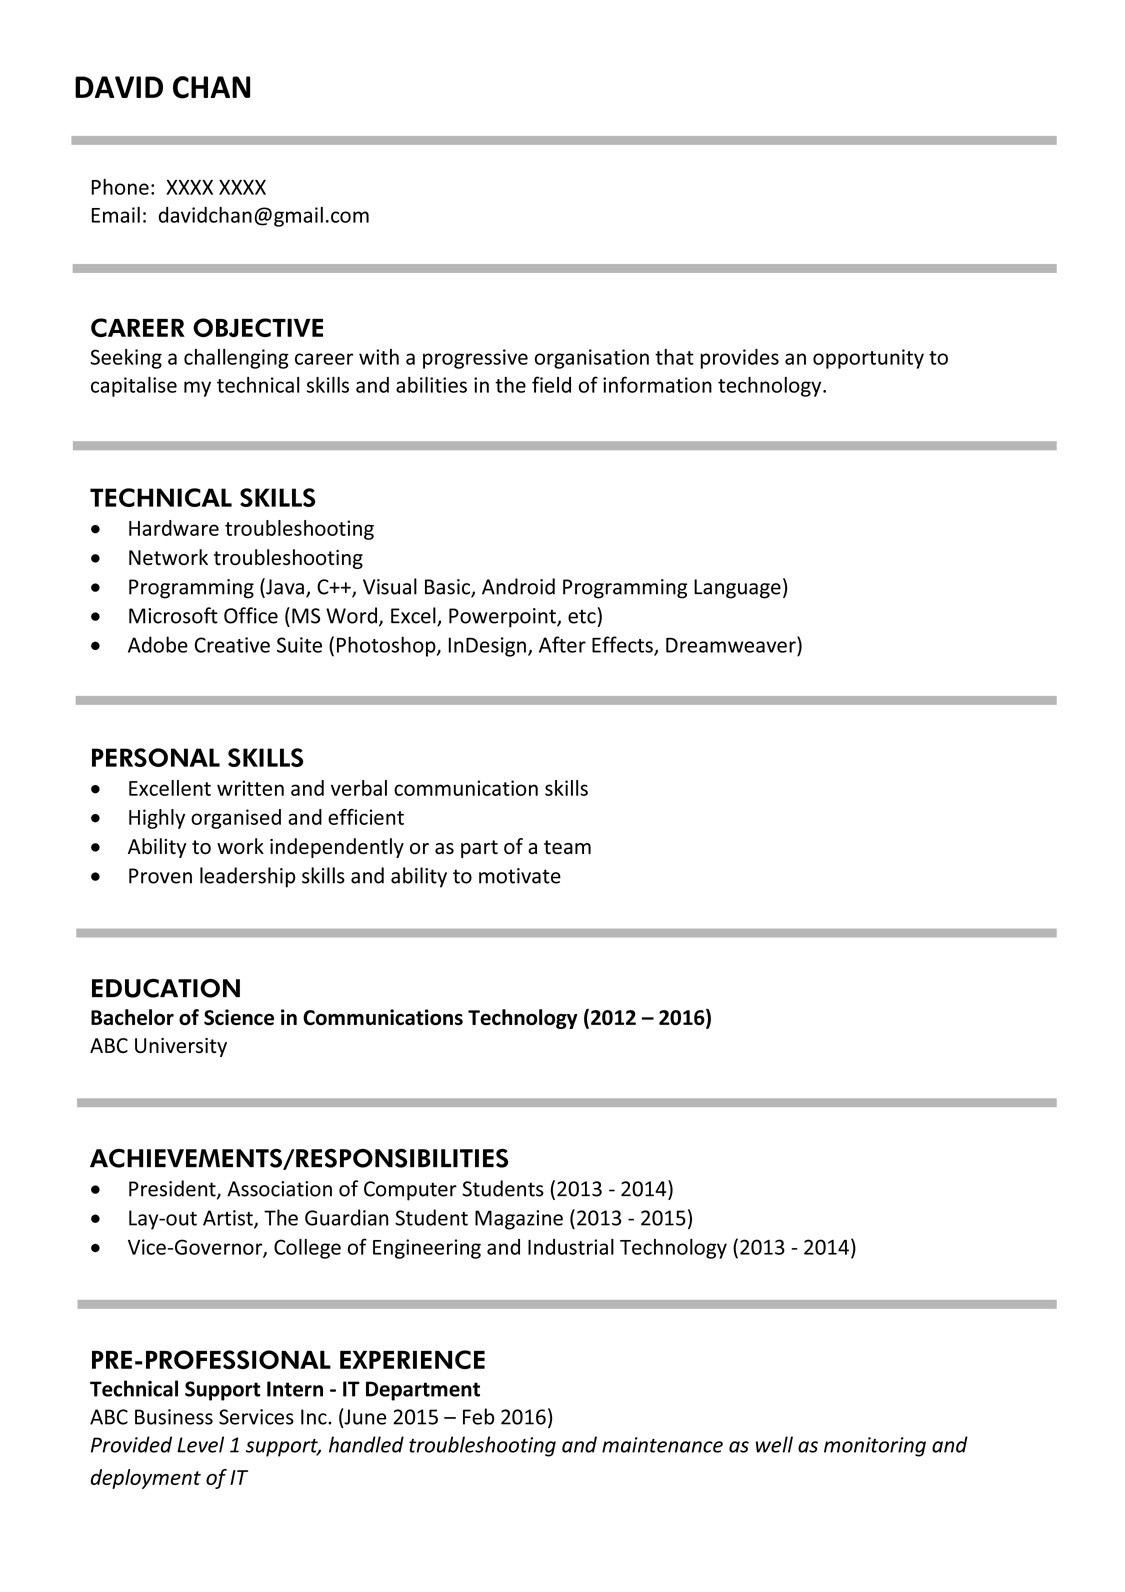 Sample Resume Objectives for Masters Degree Sample Resume for Fresh Graduates (it Professional) Jobsdb Hong Kong